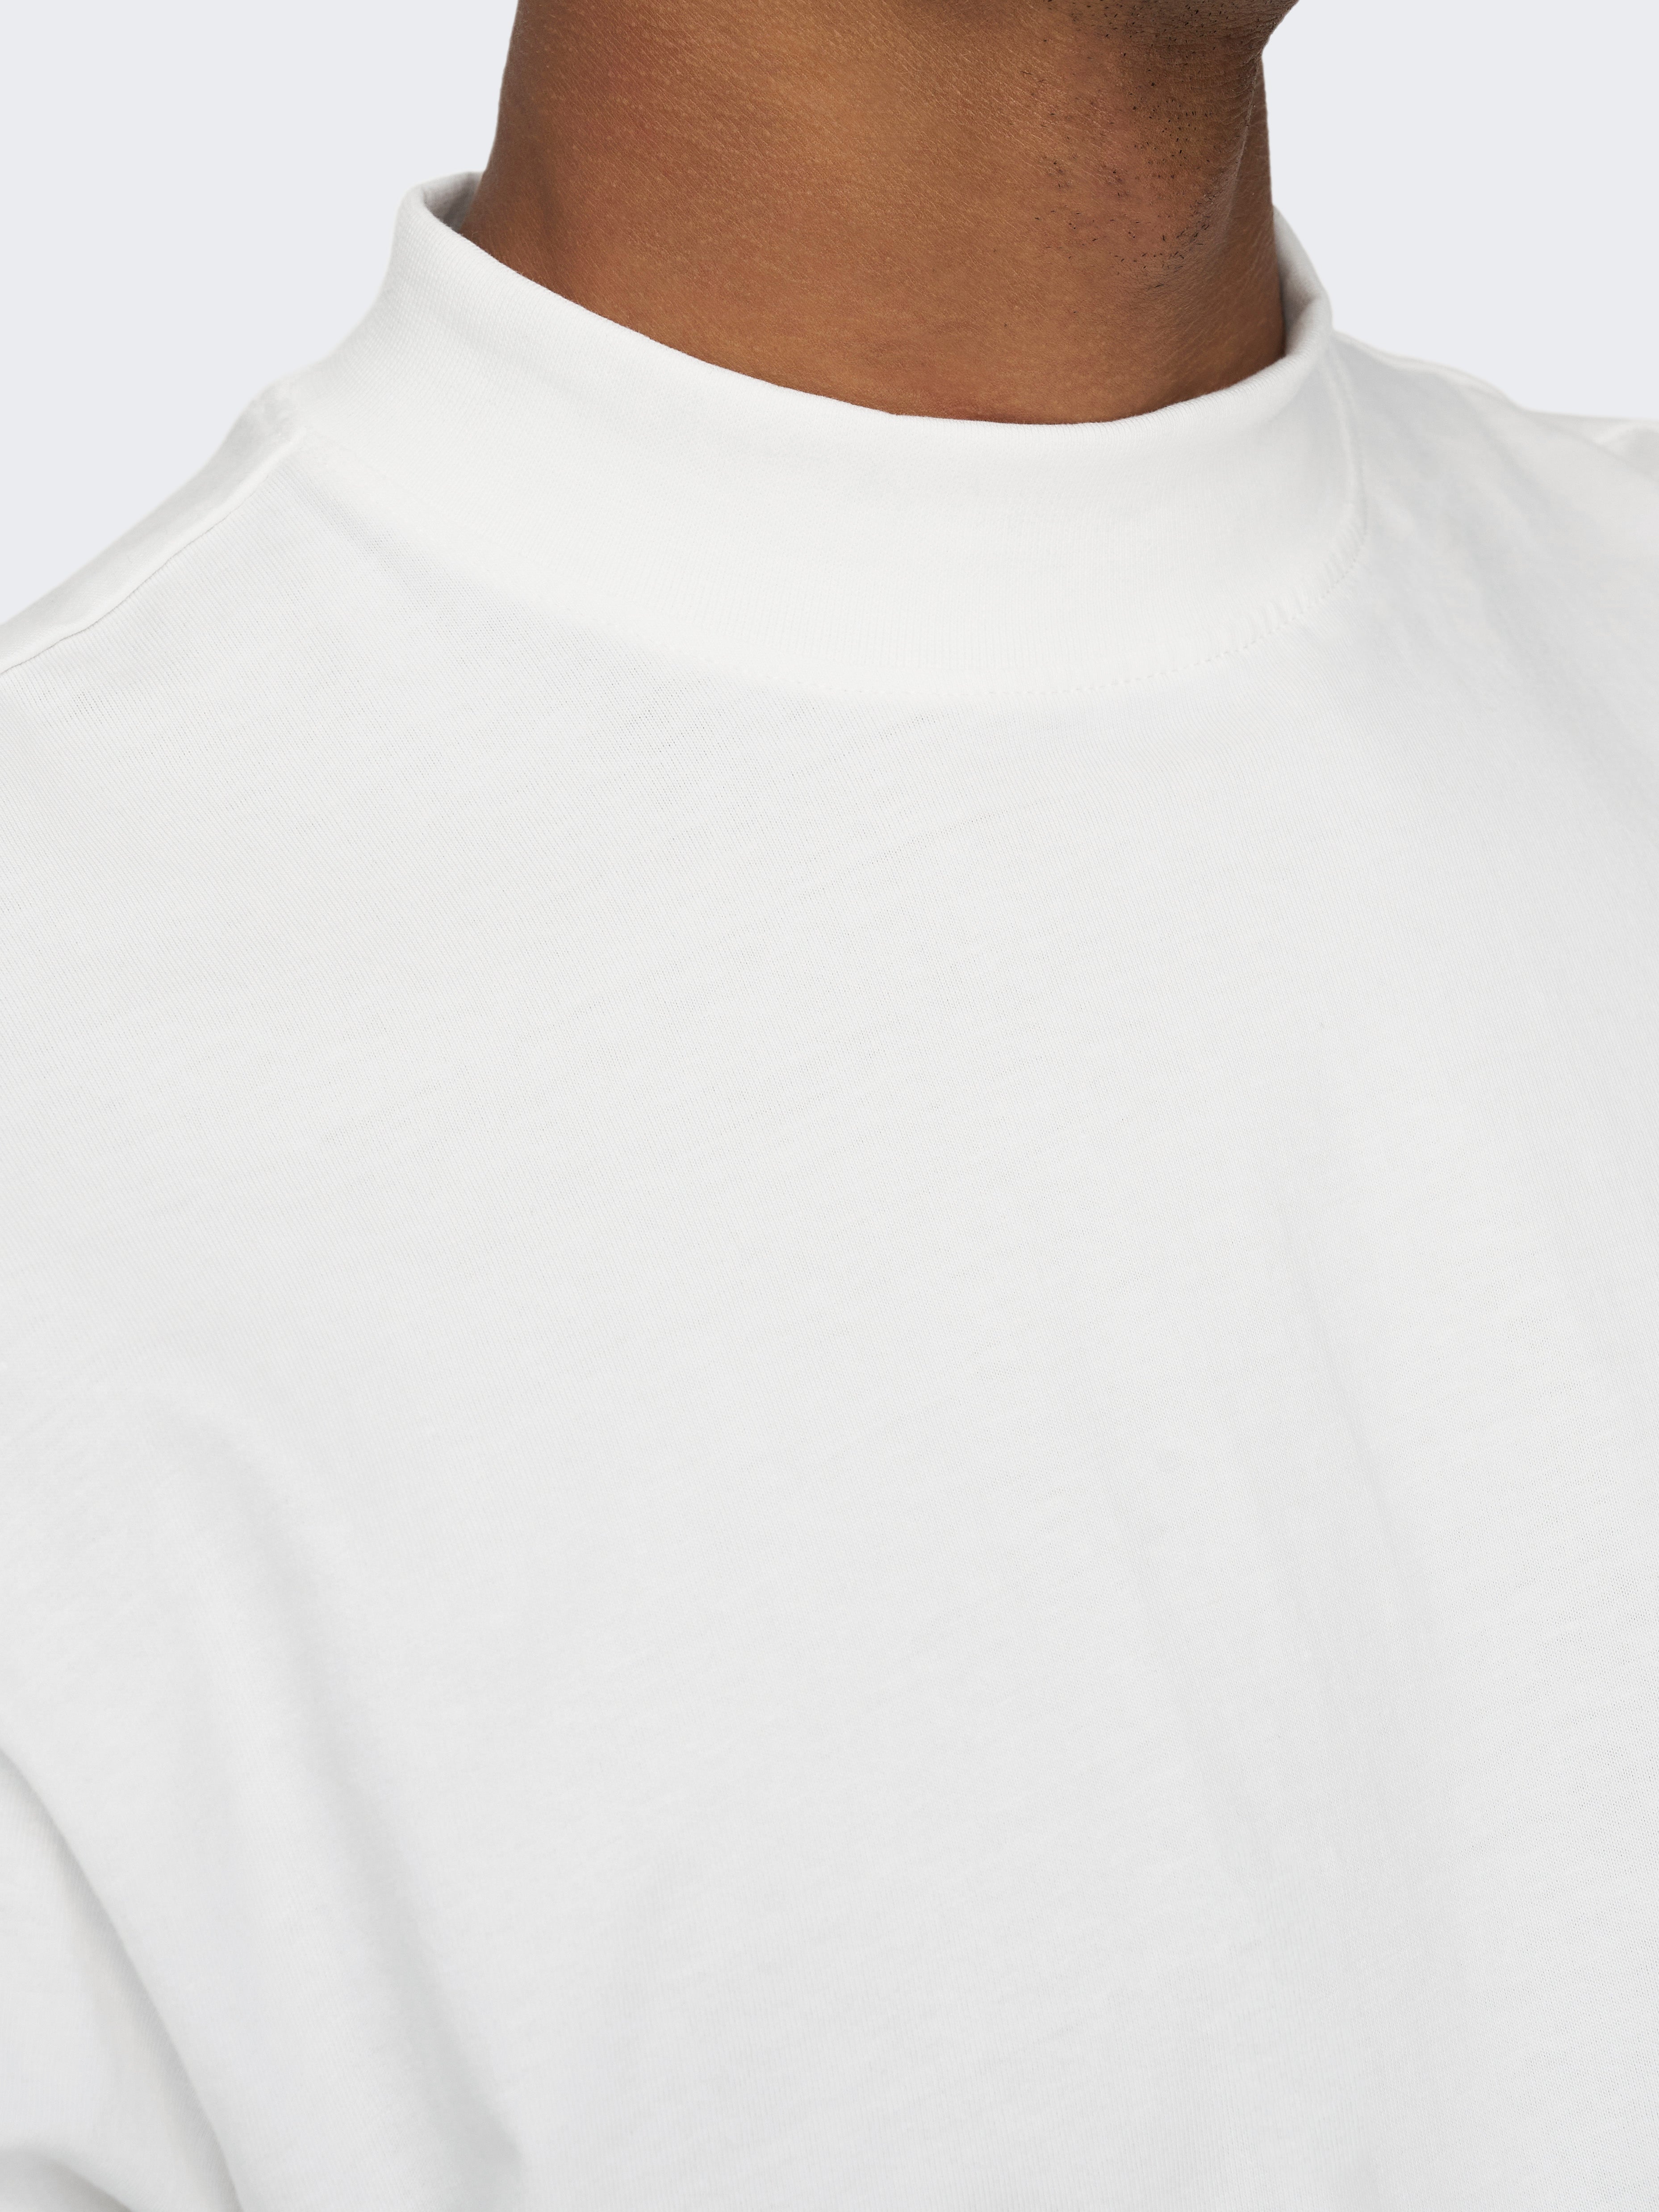 & T-Shirt Stehkragen Weiß SONS® geschnitten Locker | | ONLY